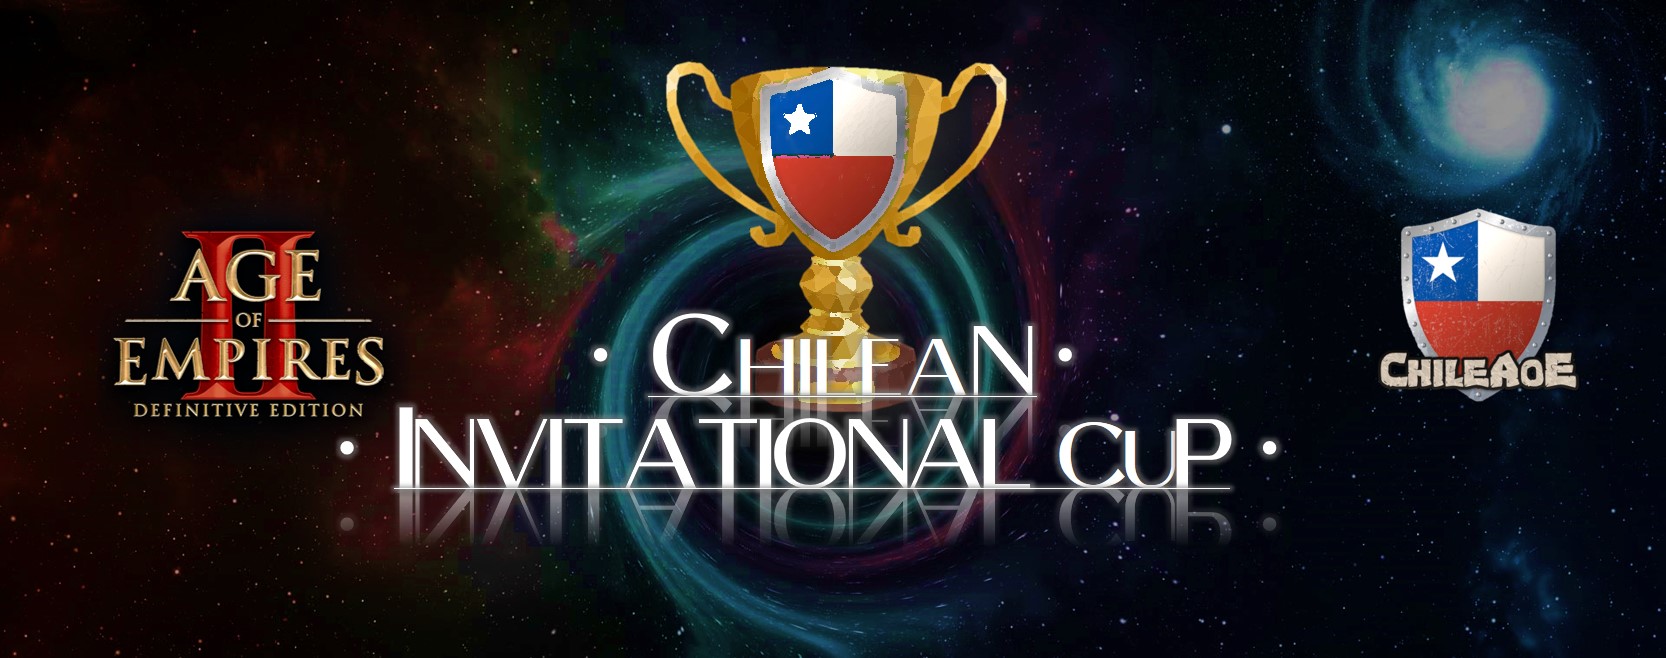 Chilean Invitational Cup.jpg